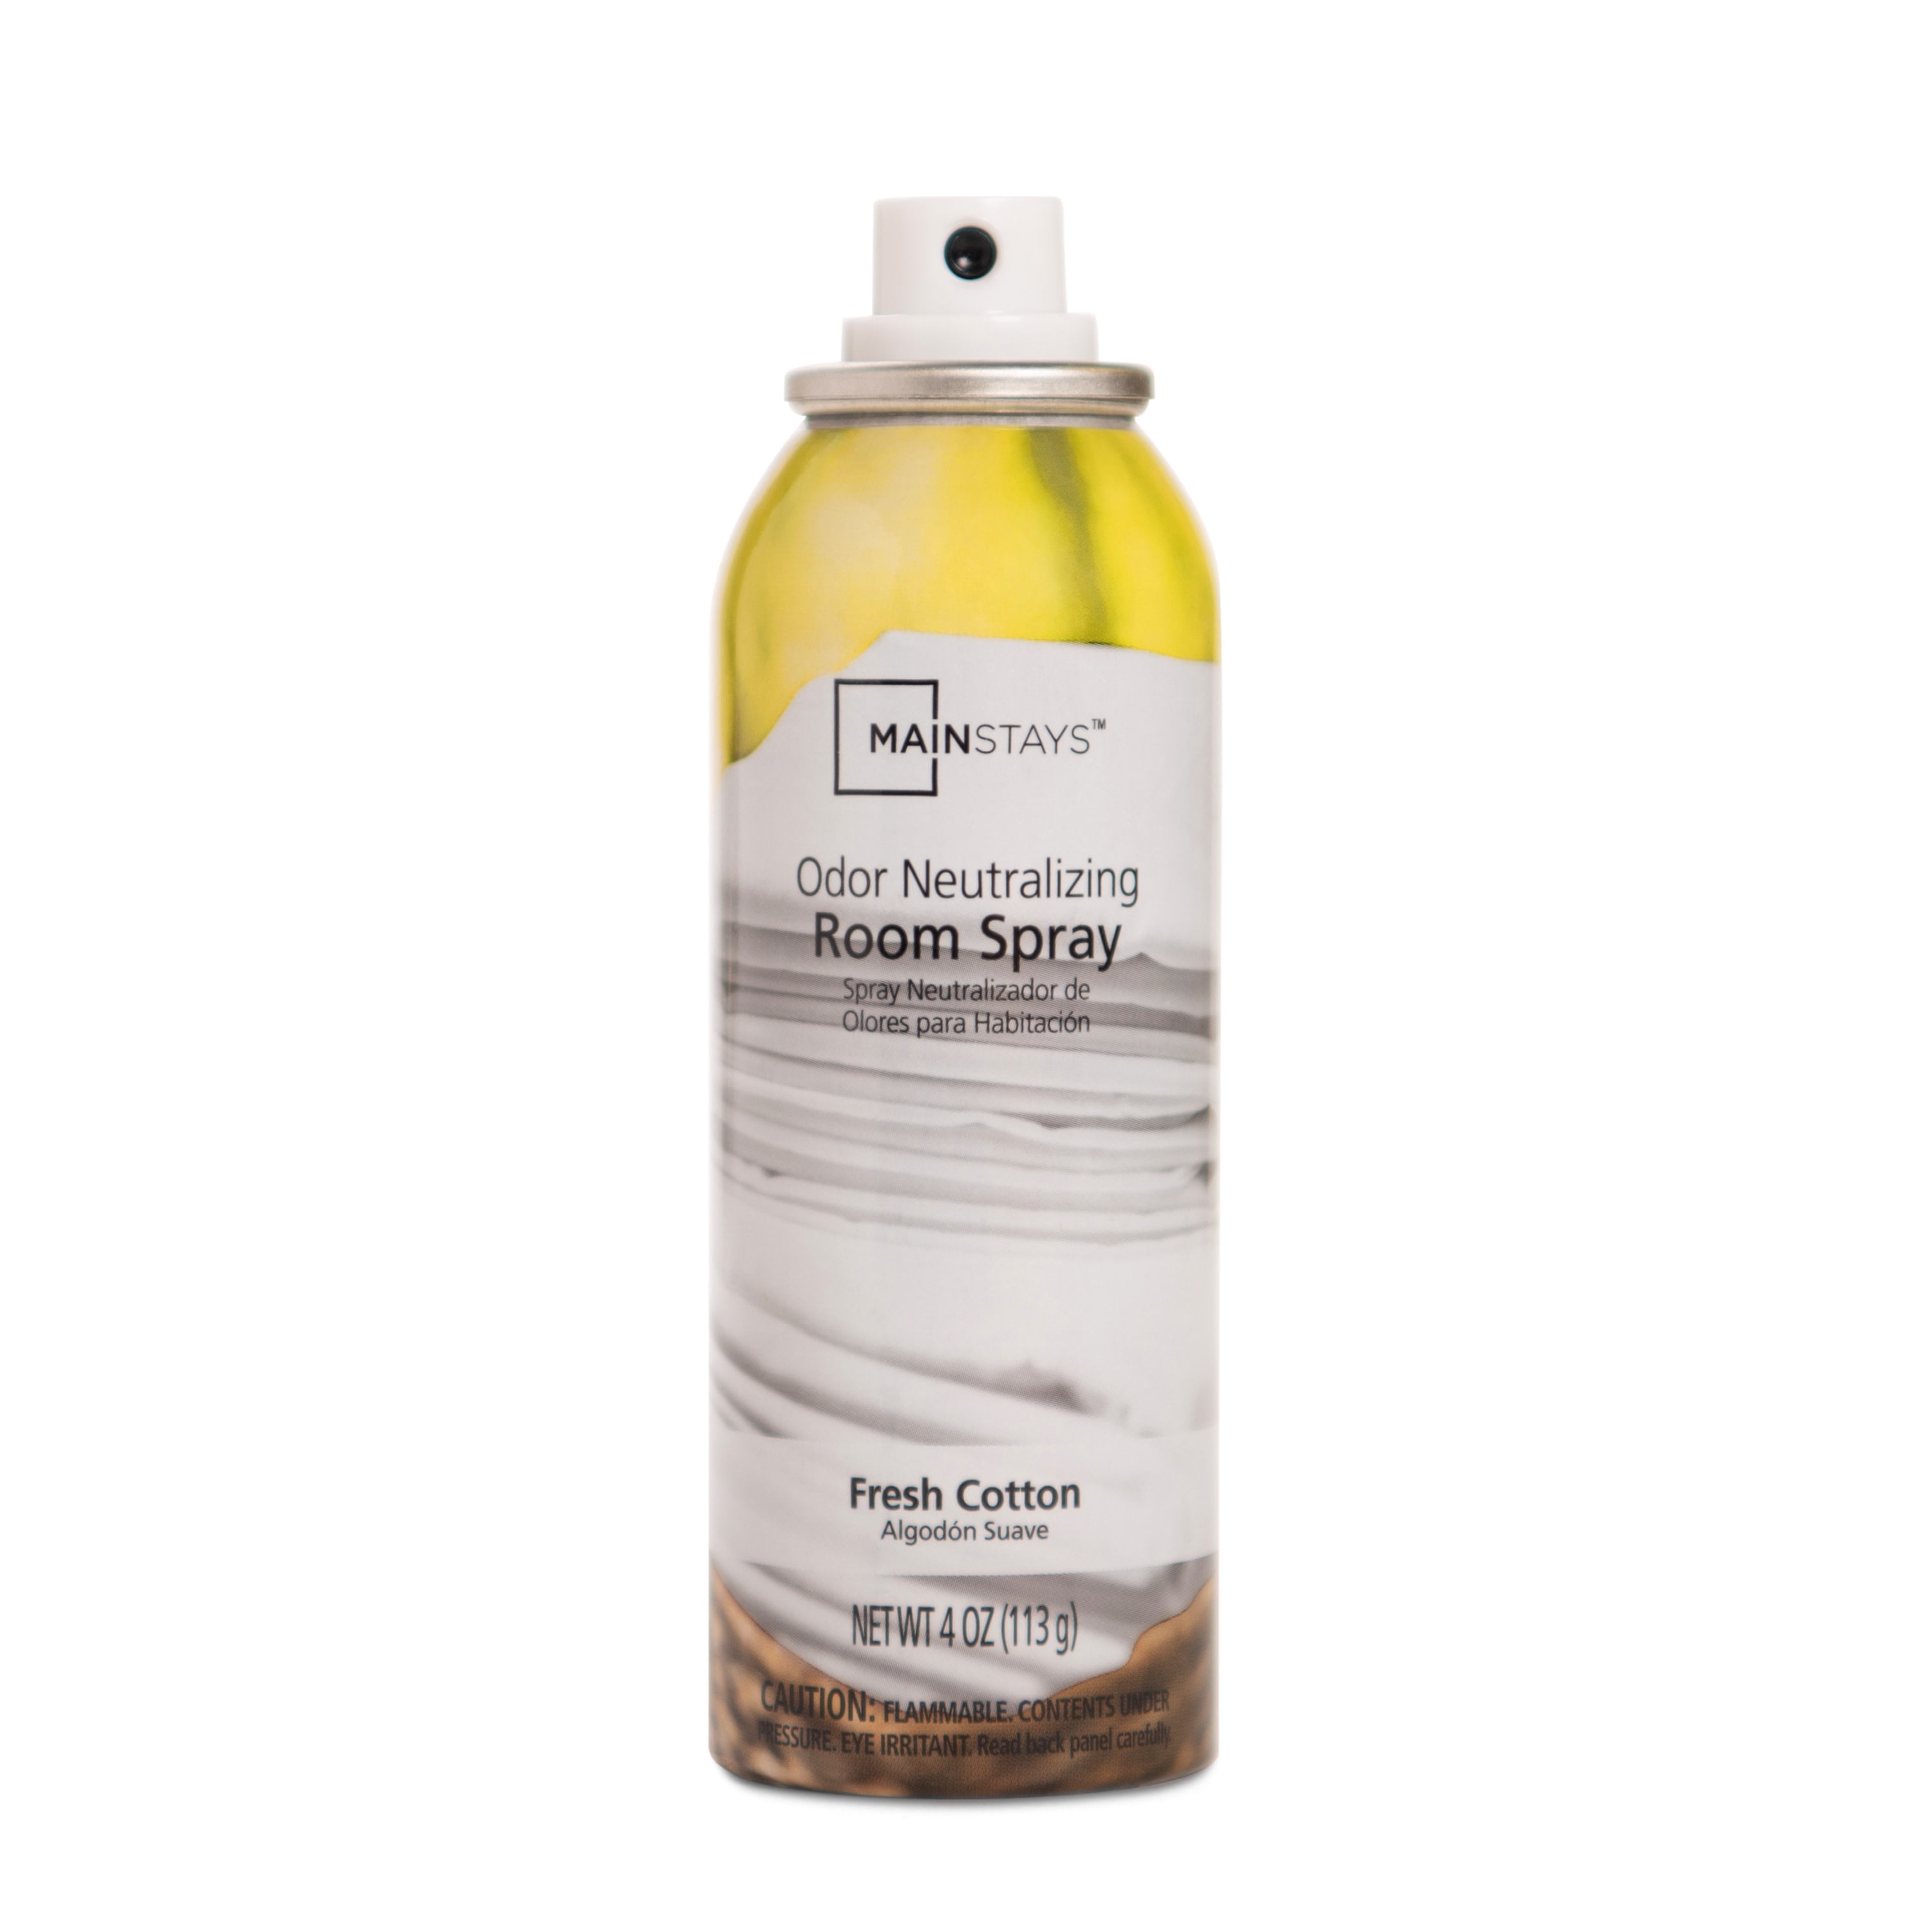 Mainstays Odor Neutralizing Room Spray, Fresh Cotton Air Freshner